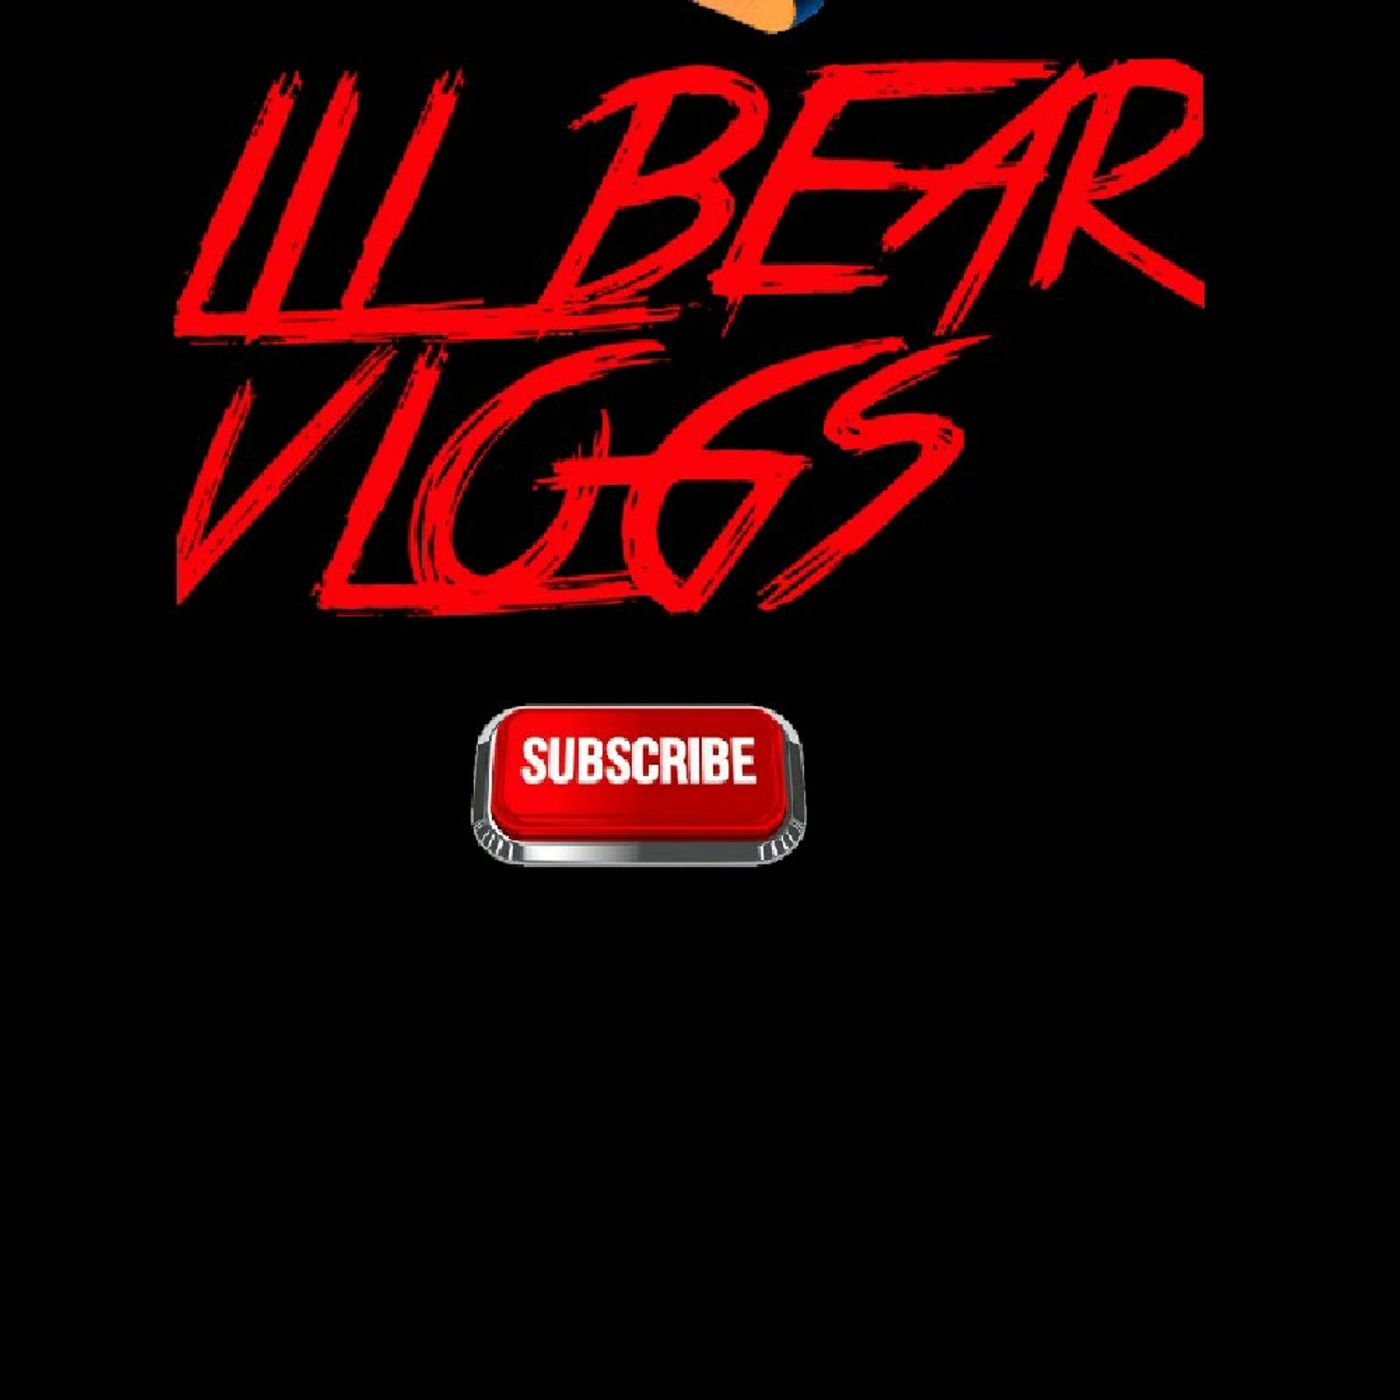 Lil Bear vlogs's show